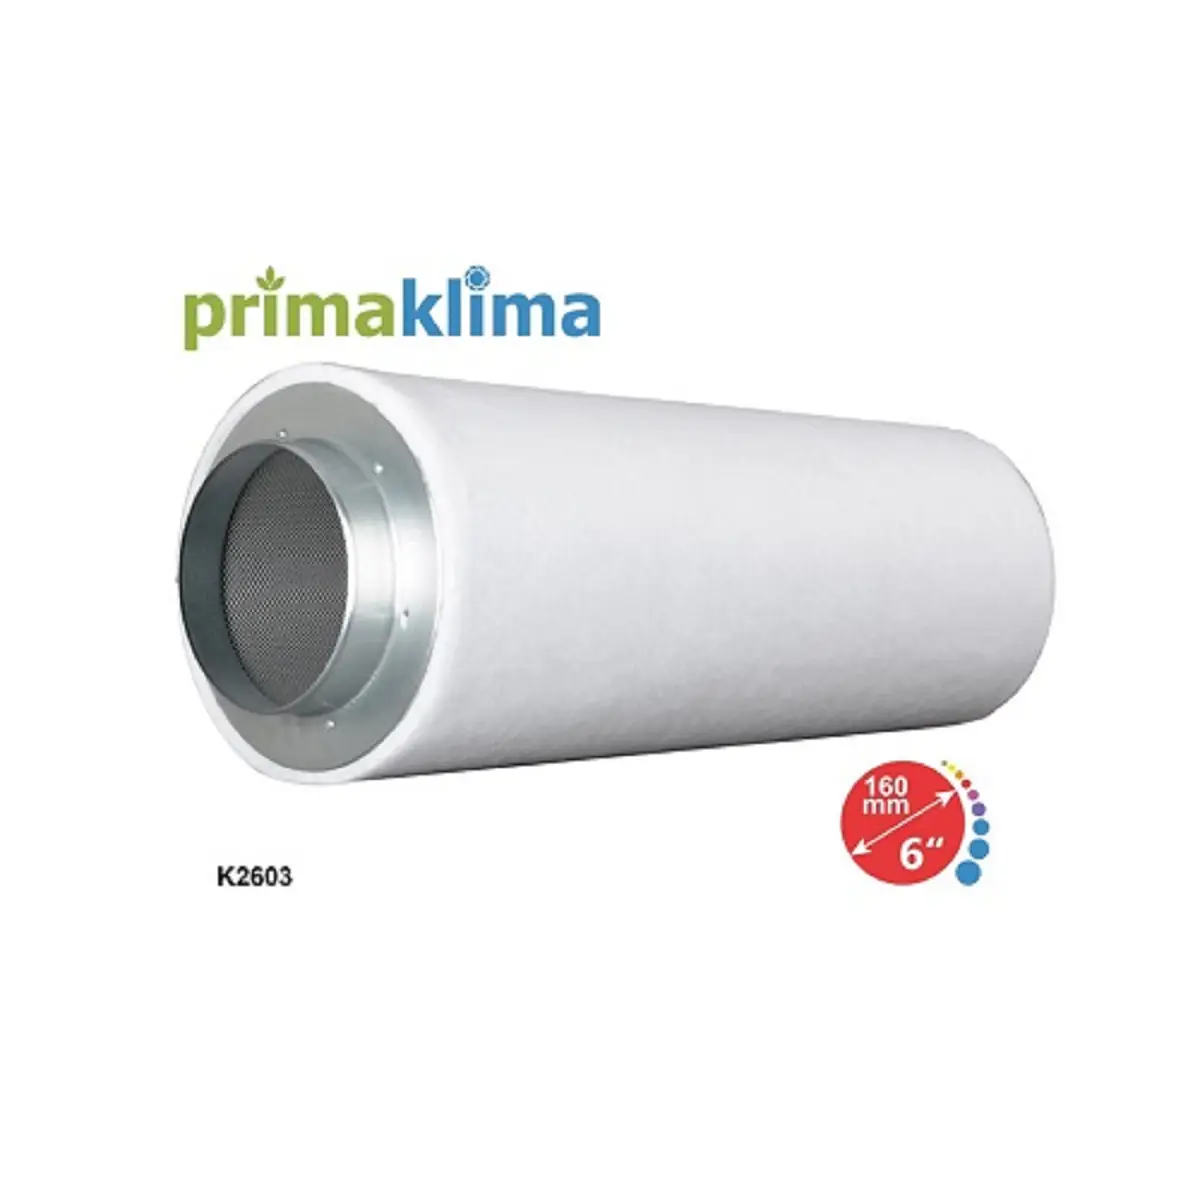 Filtre à charbon 160mm Prima Klima Ecoline k2603